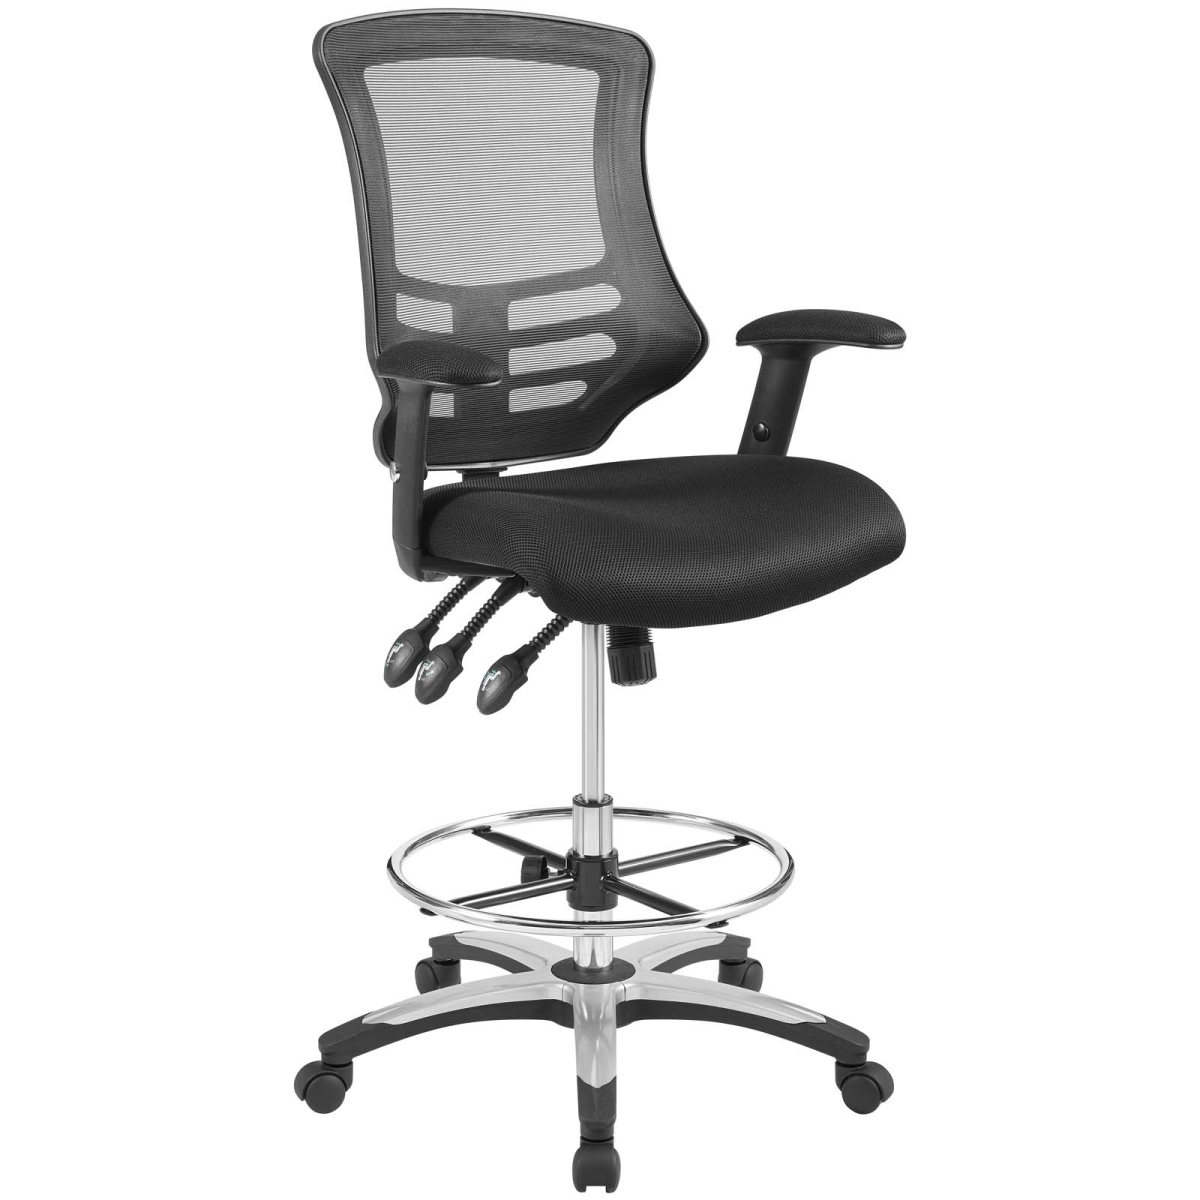 Eei-3043-blk Calibrate Mesh Drafting Chair - Black, 42.5 - 52.5 X 26.5 X 27 In.